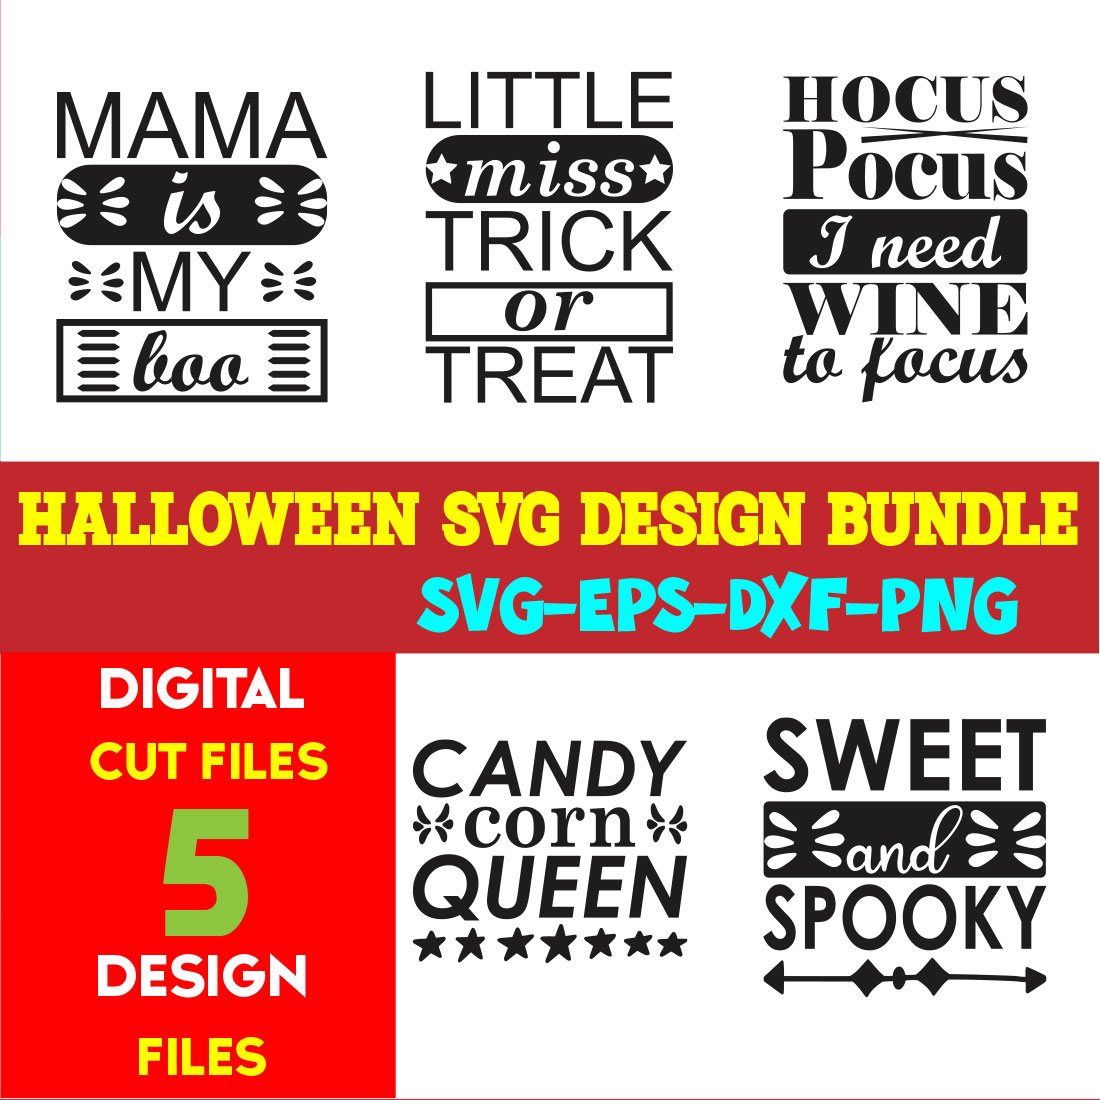 Halloween T-shirt Design Bundle Vol-52 cover image.